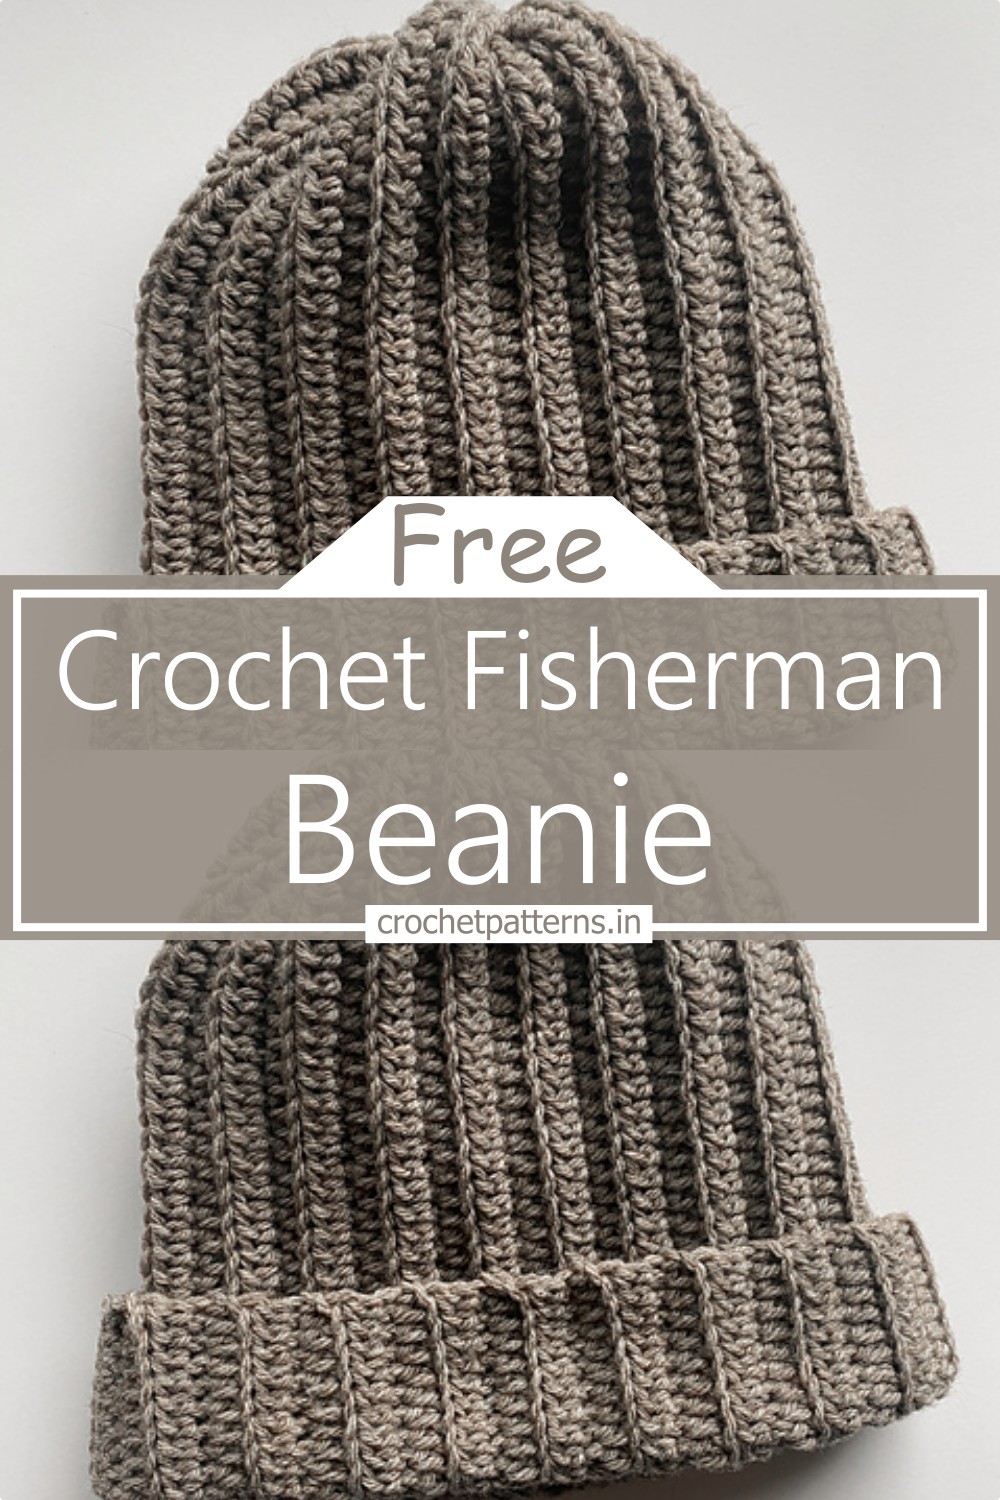 Crochet Fisherman Beanie